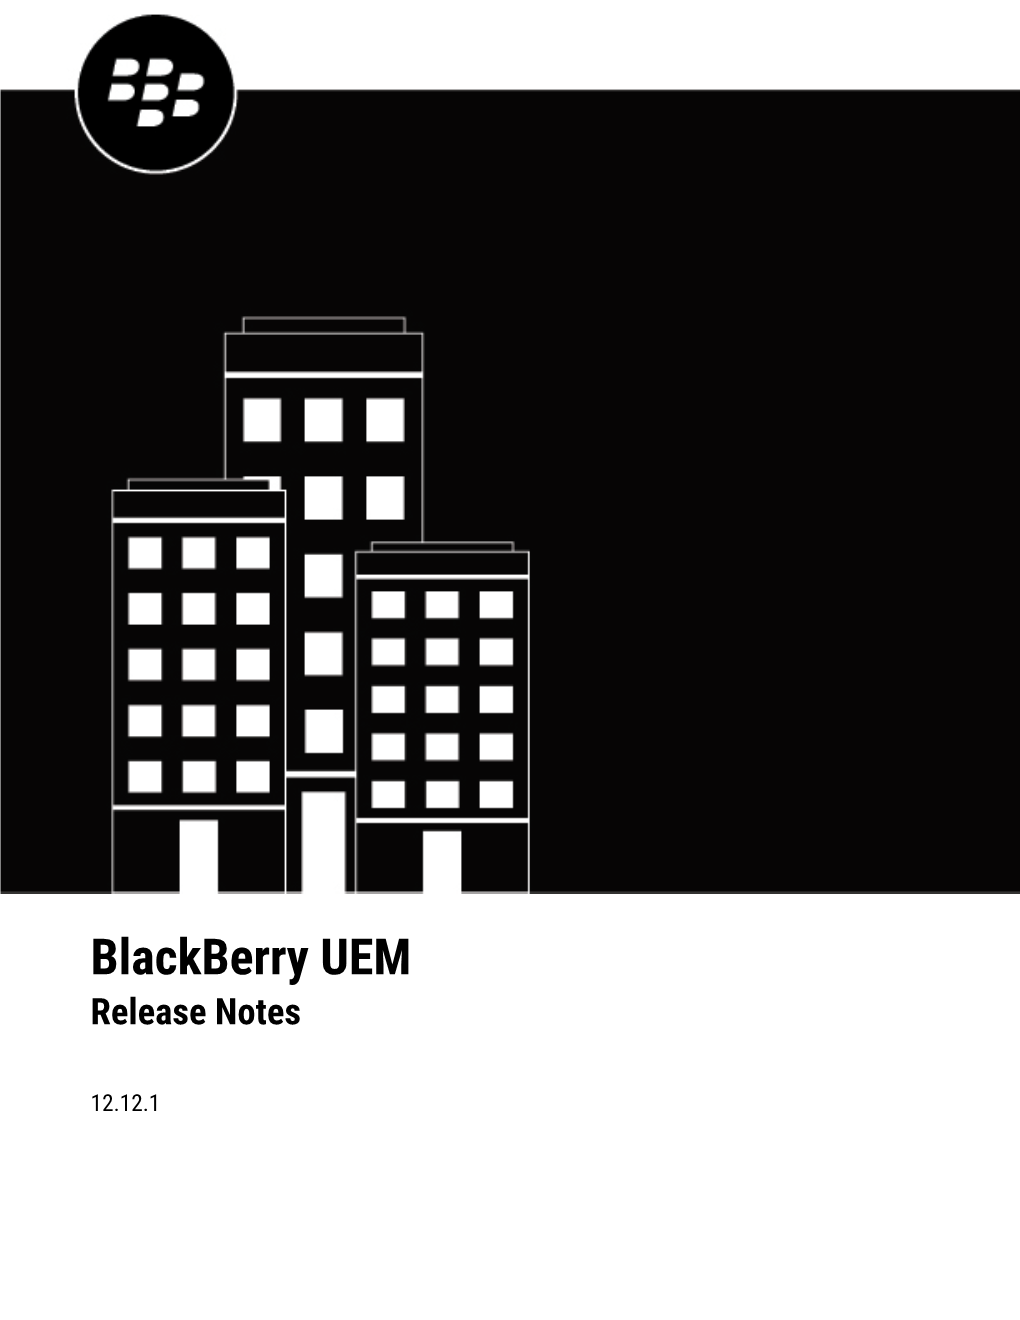 Blackberry UEM 12.12 Release Notes